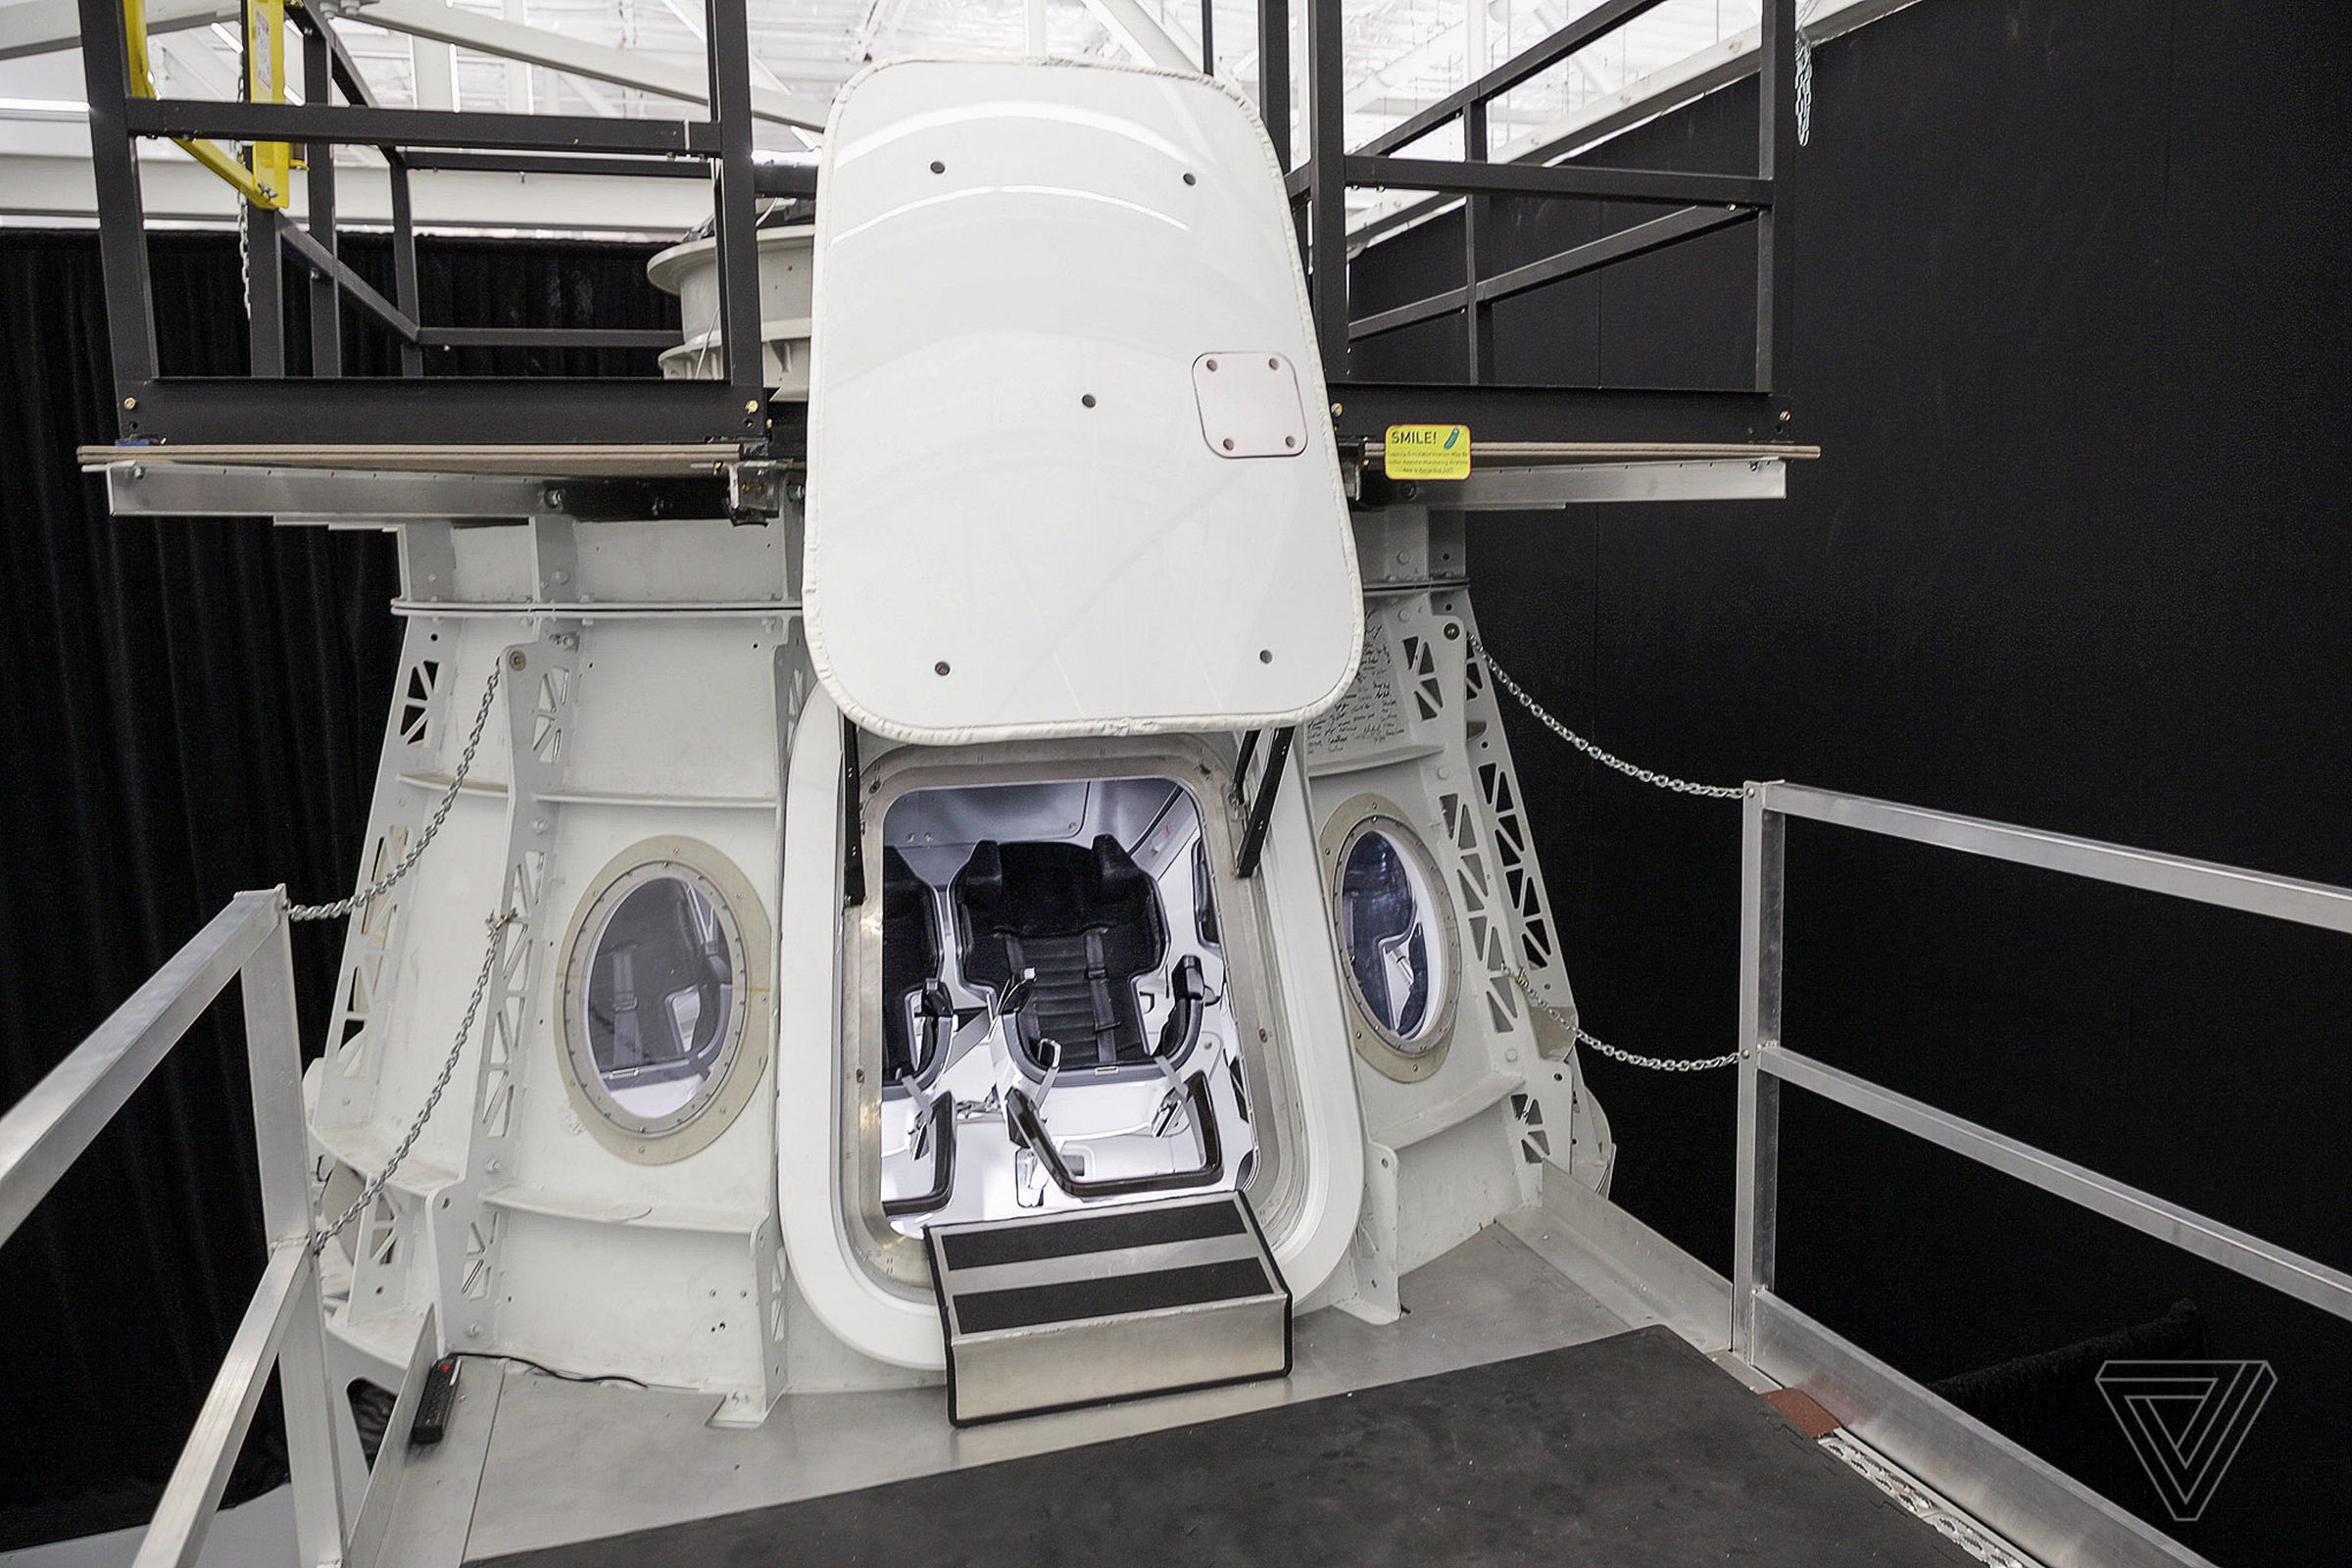 The Crew Dragon capsule simulator at SpaceX’s headquarters.